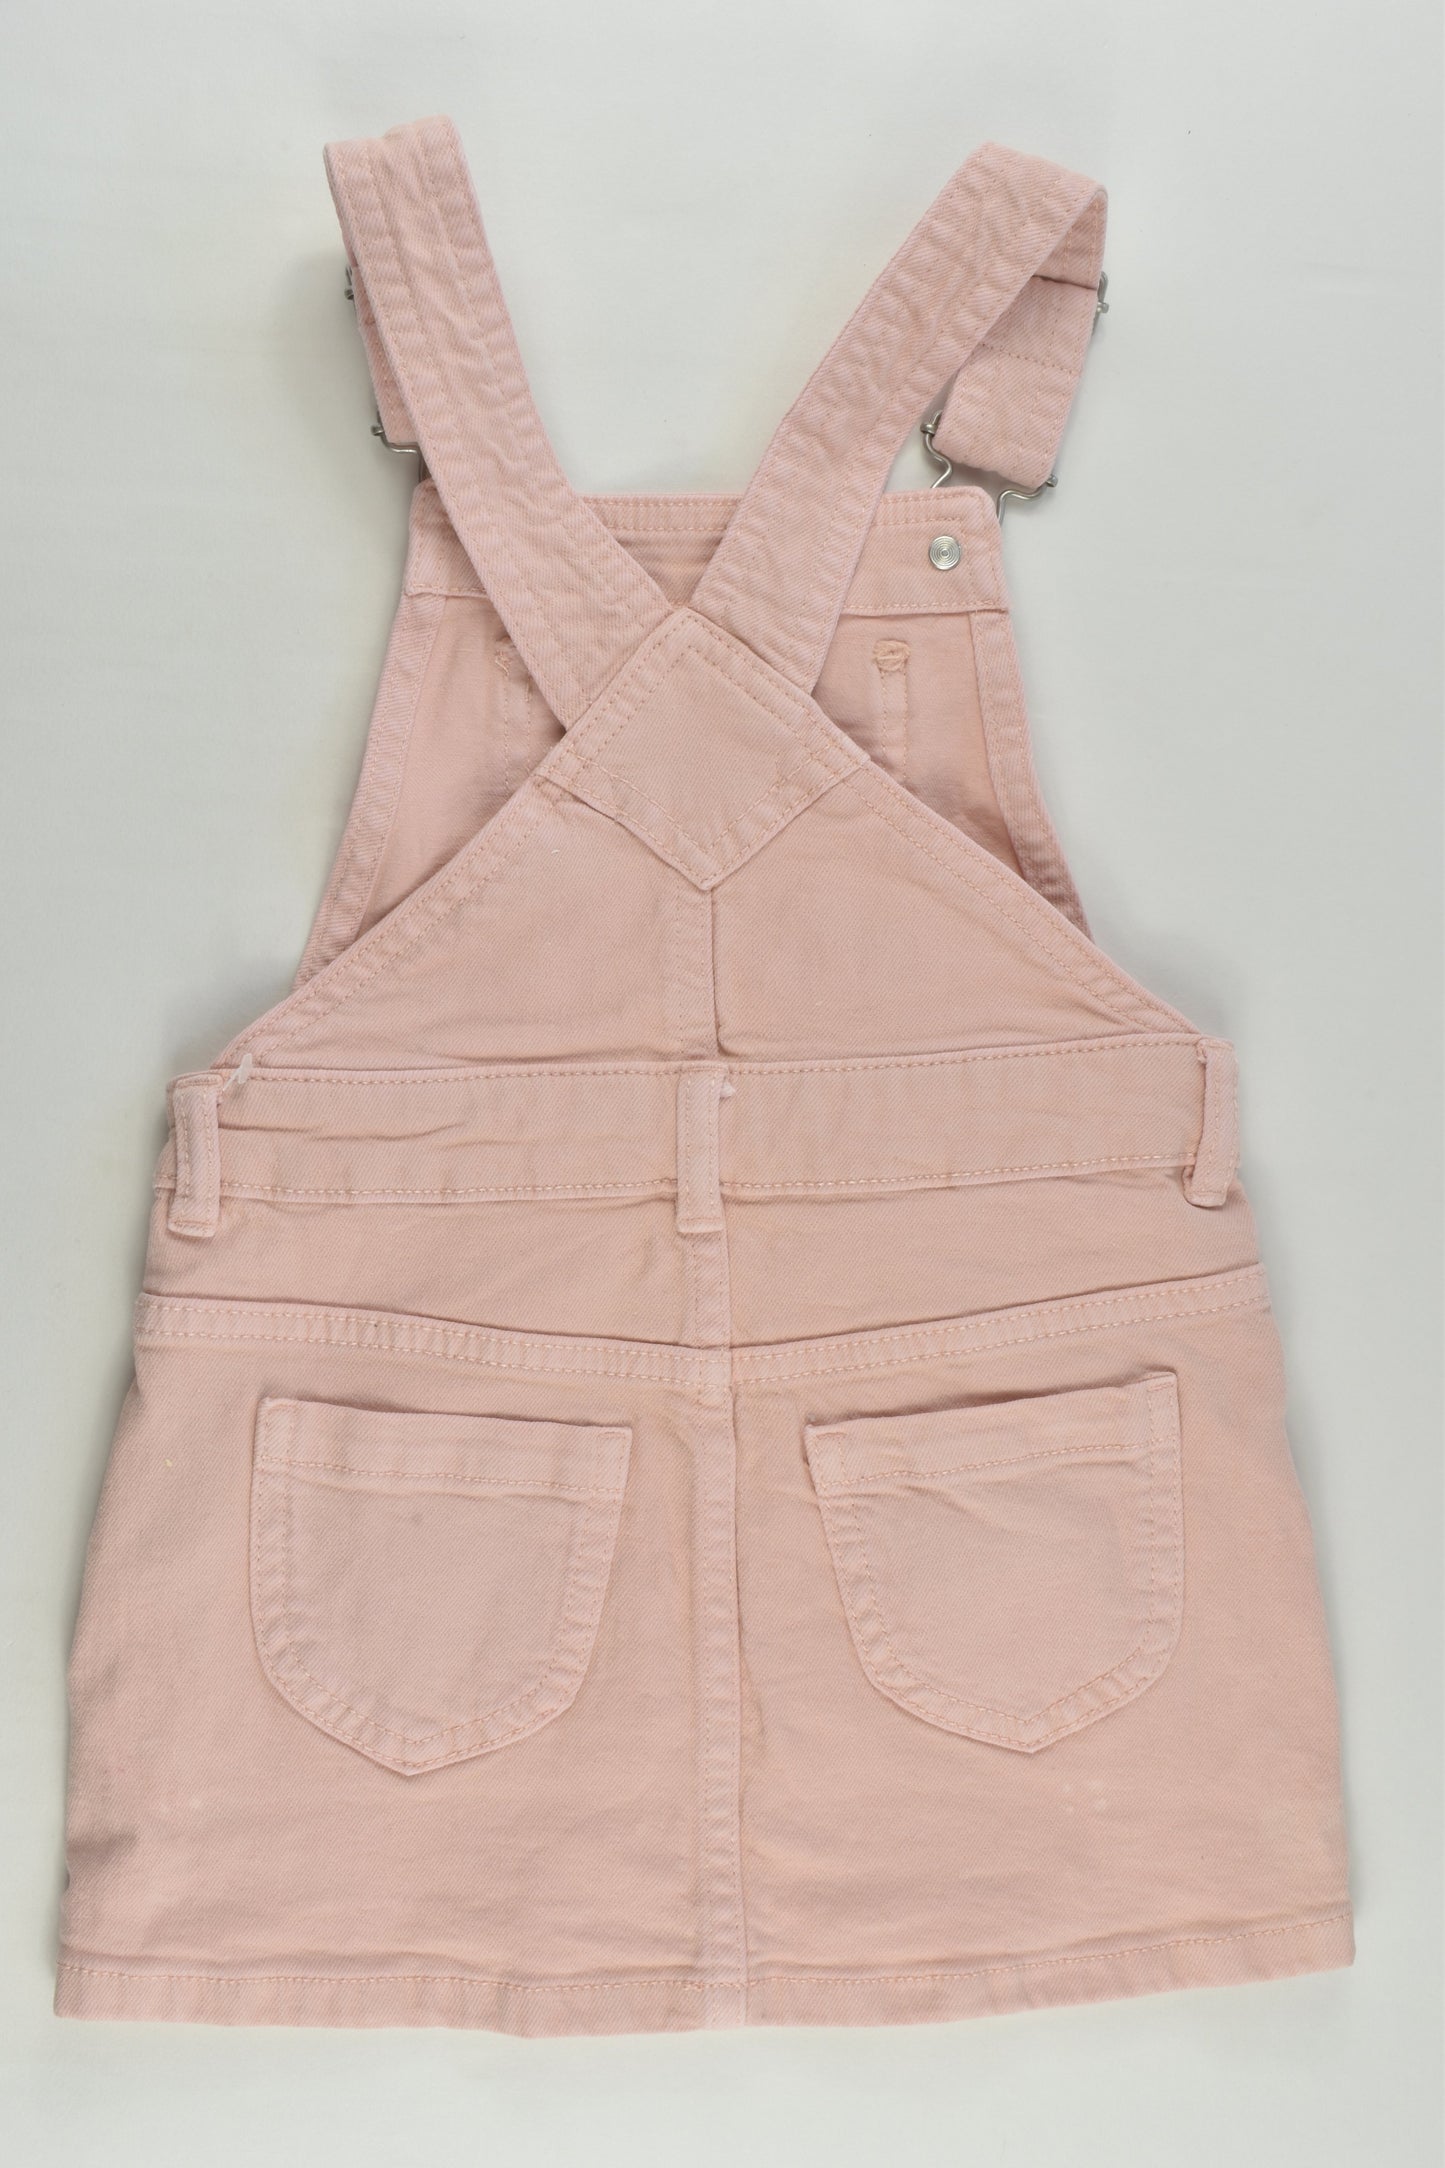 Target Size 3 Stretchy Pink Denim Dress